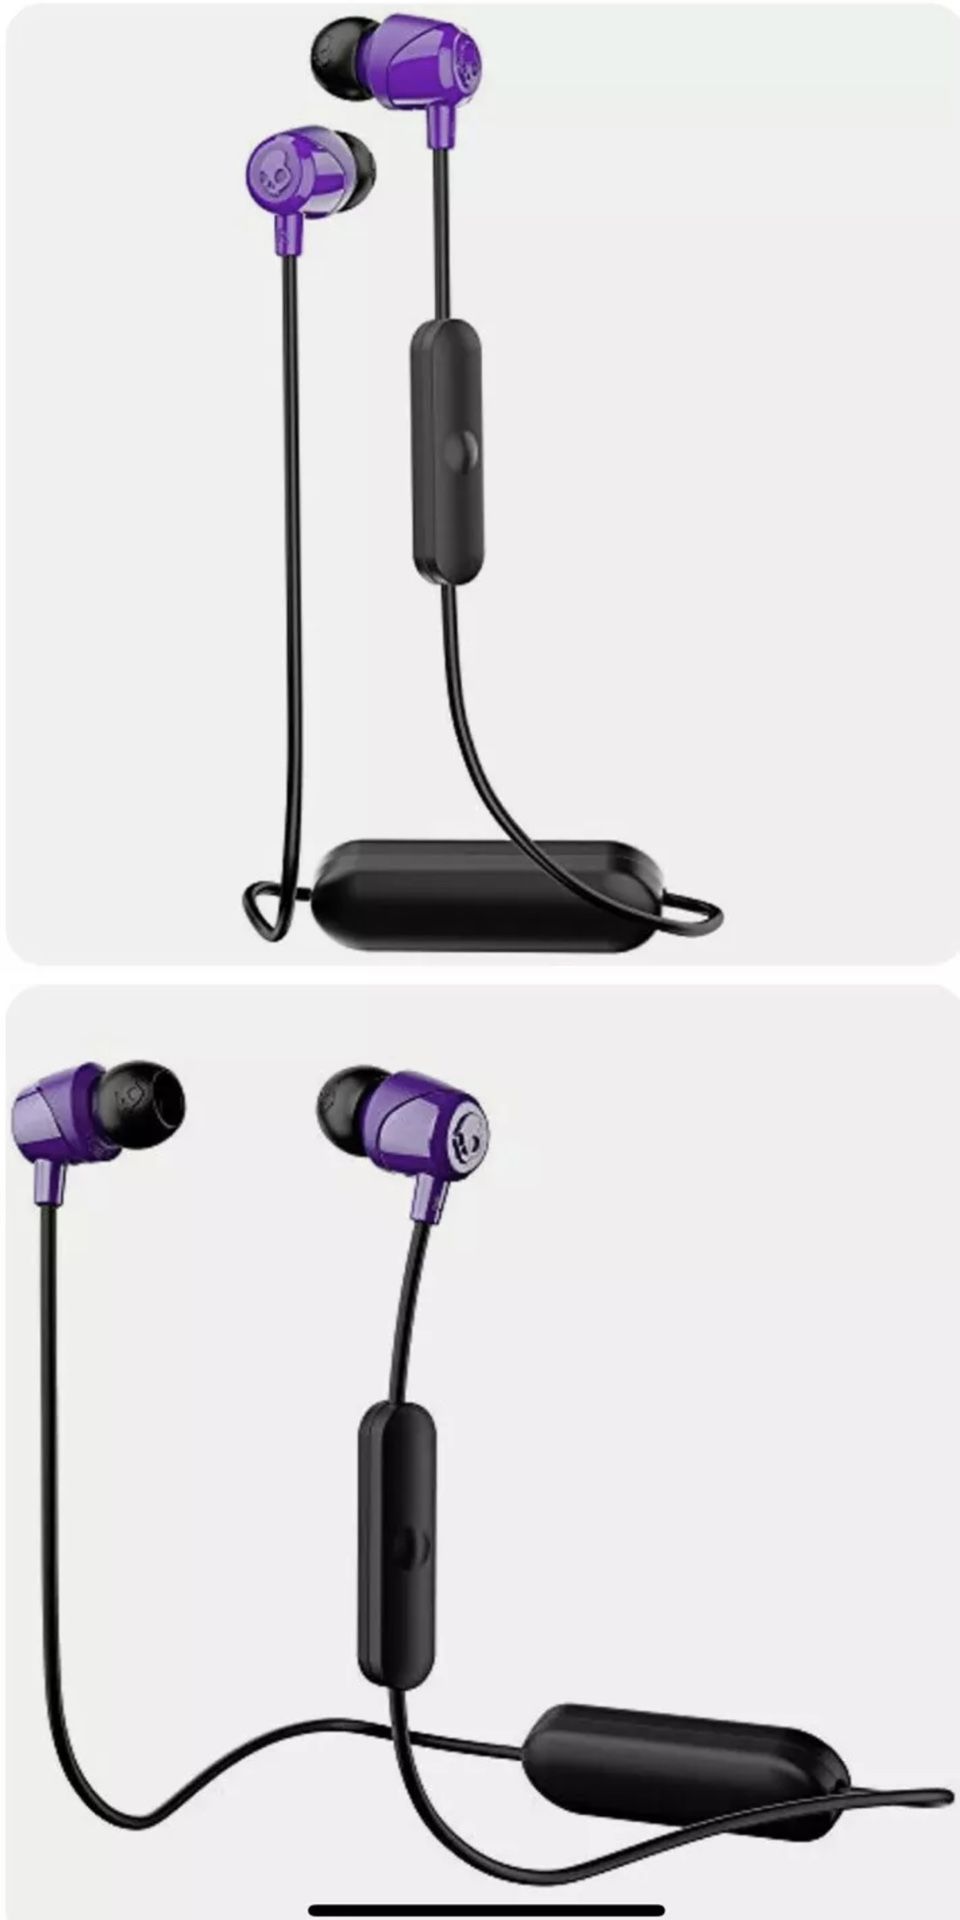 Skullcandy Jib Wireless In-Ear Earbud - Purple Black Or White/Crimson To Choose From- BRAND NEW